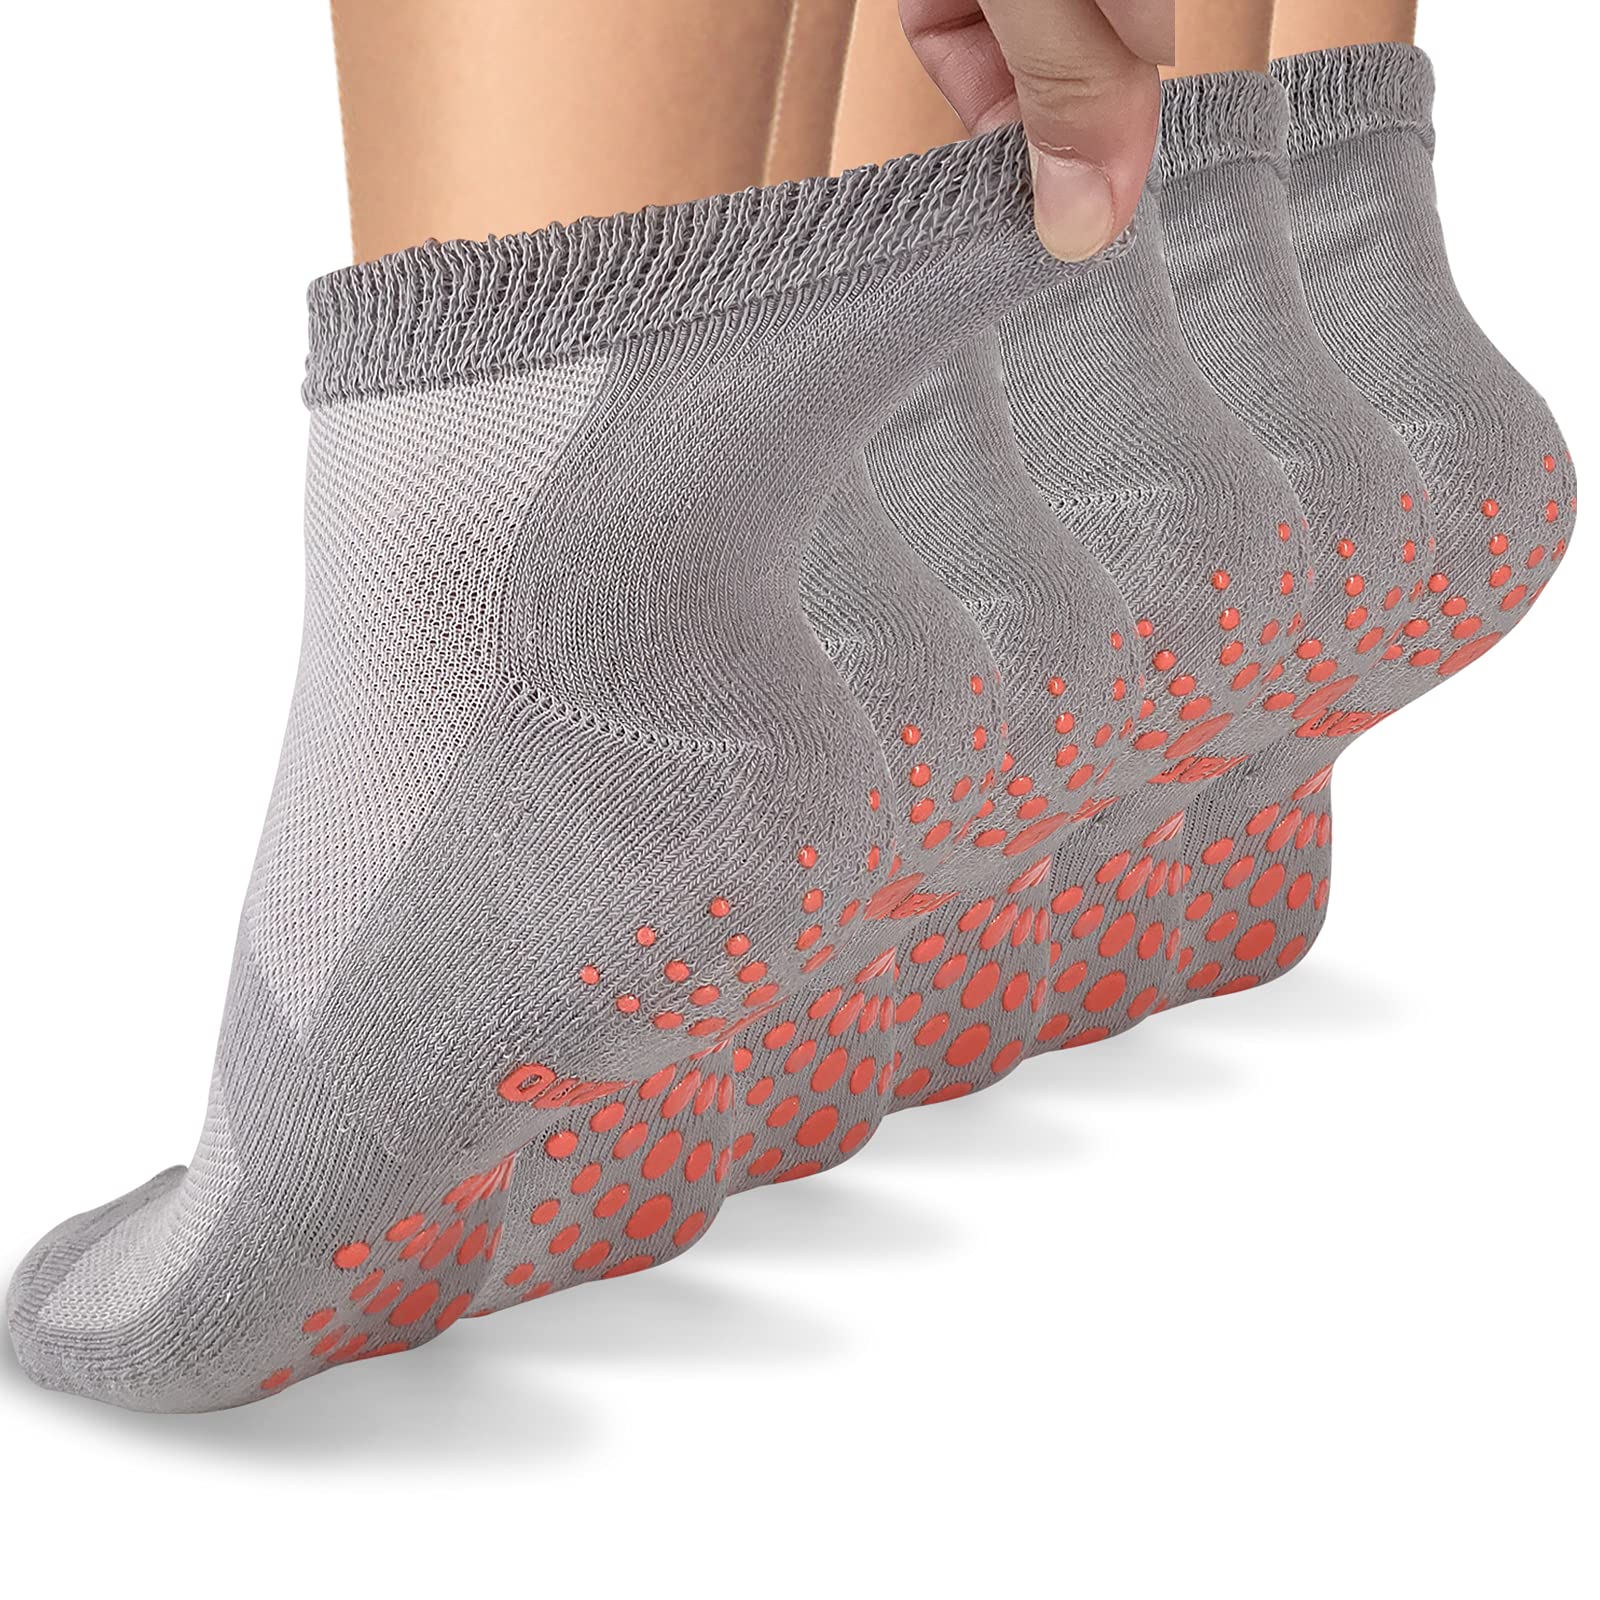 Aaronano 6 Pairs Diabetic Socks Non Slip Hospital Gripper Socks